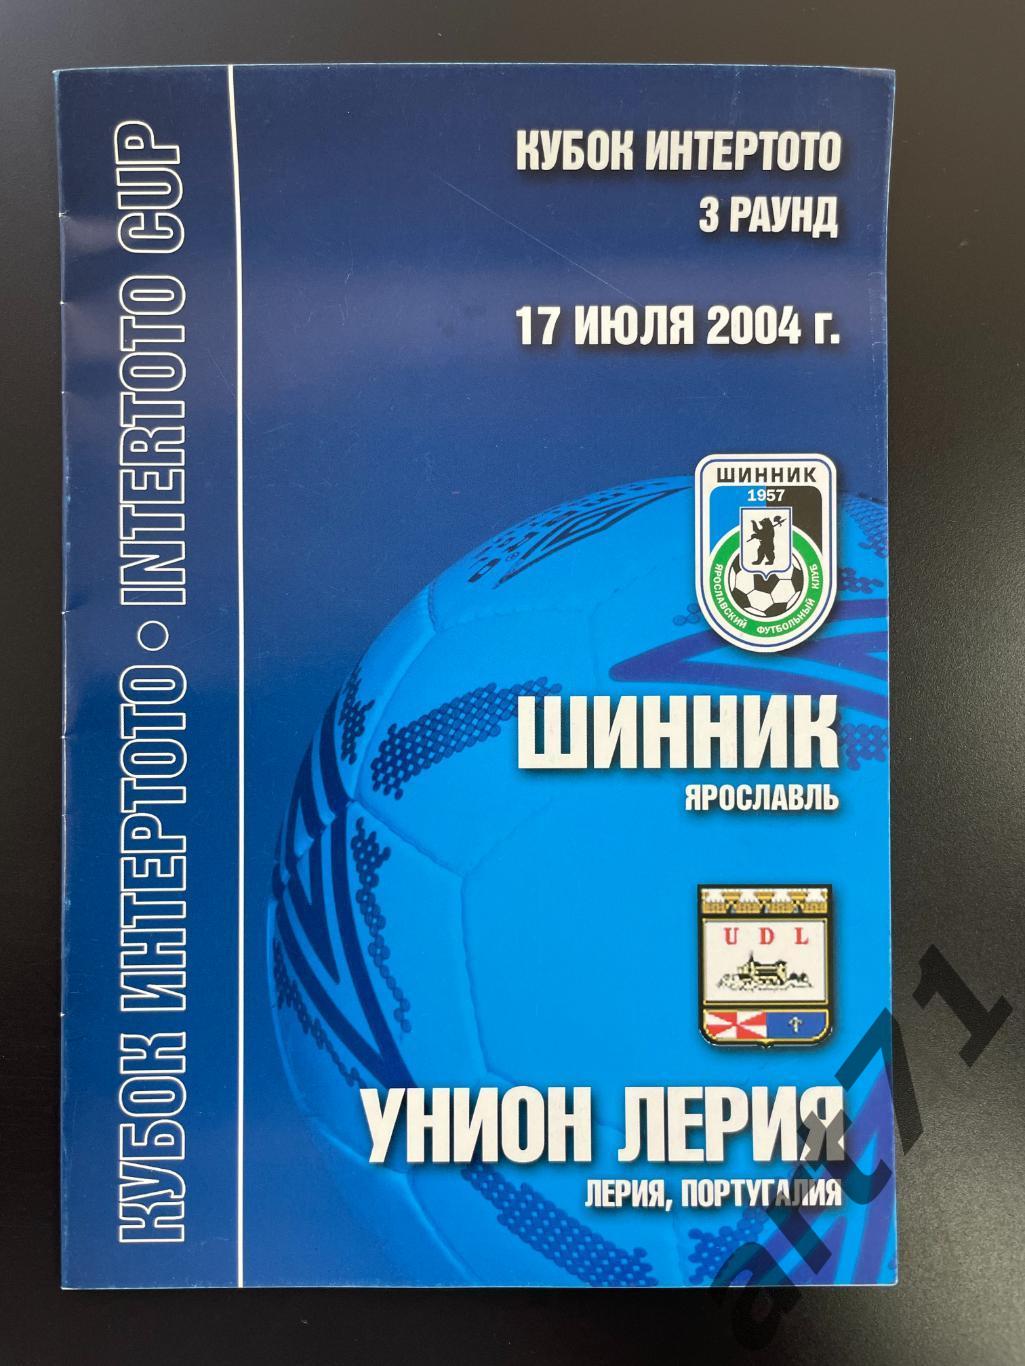 Шинник, Ярославль - Унион Лейрия 2004